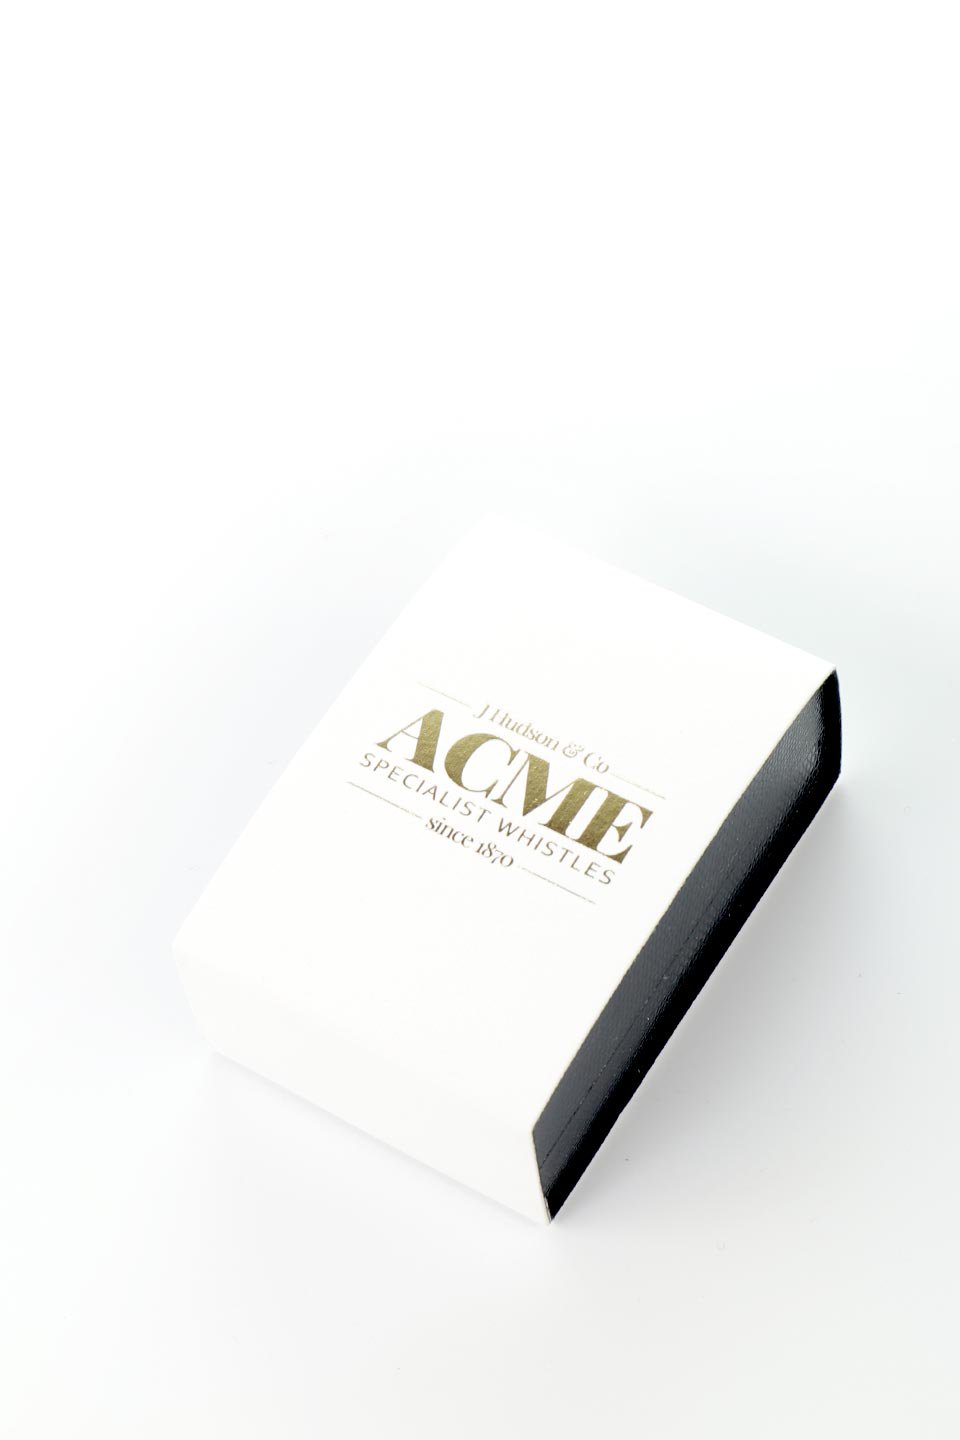 Acme Silent Dog Whistle (Gold) アクメ社・サイレントドッグホイッスル（ゴールド） / by Acme|ドッグ グッズを海外から直輸入/福島市パセオ通りbloom